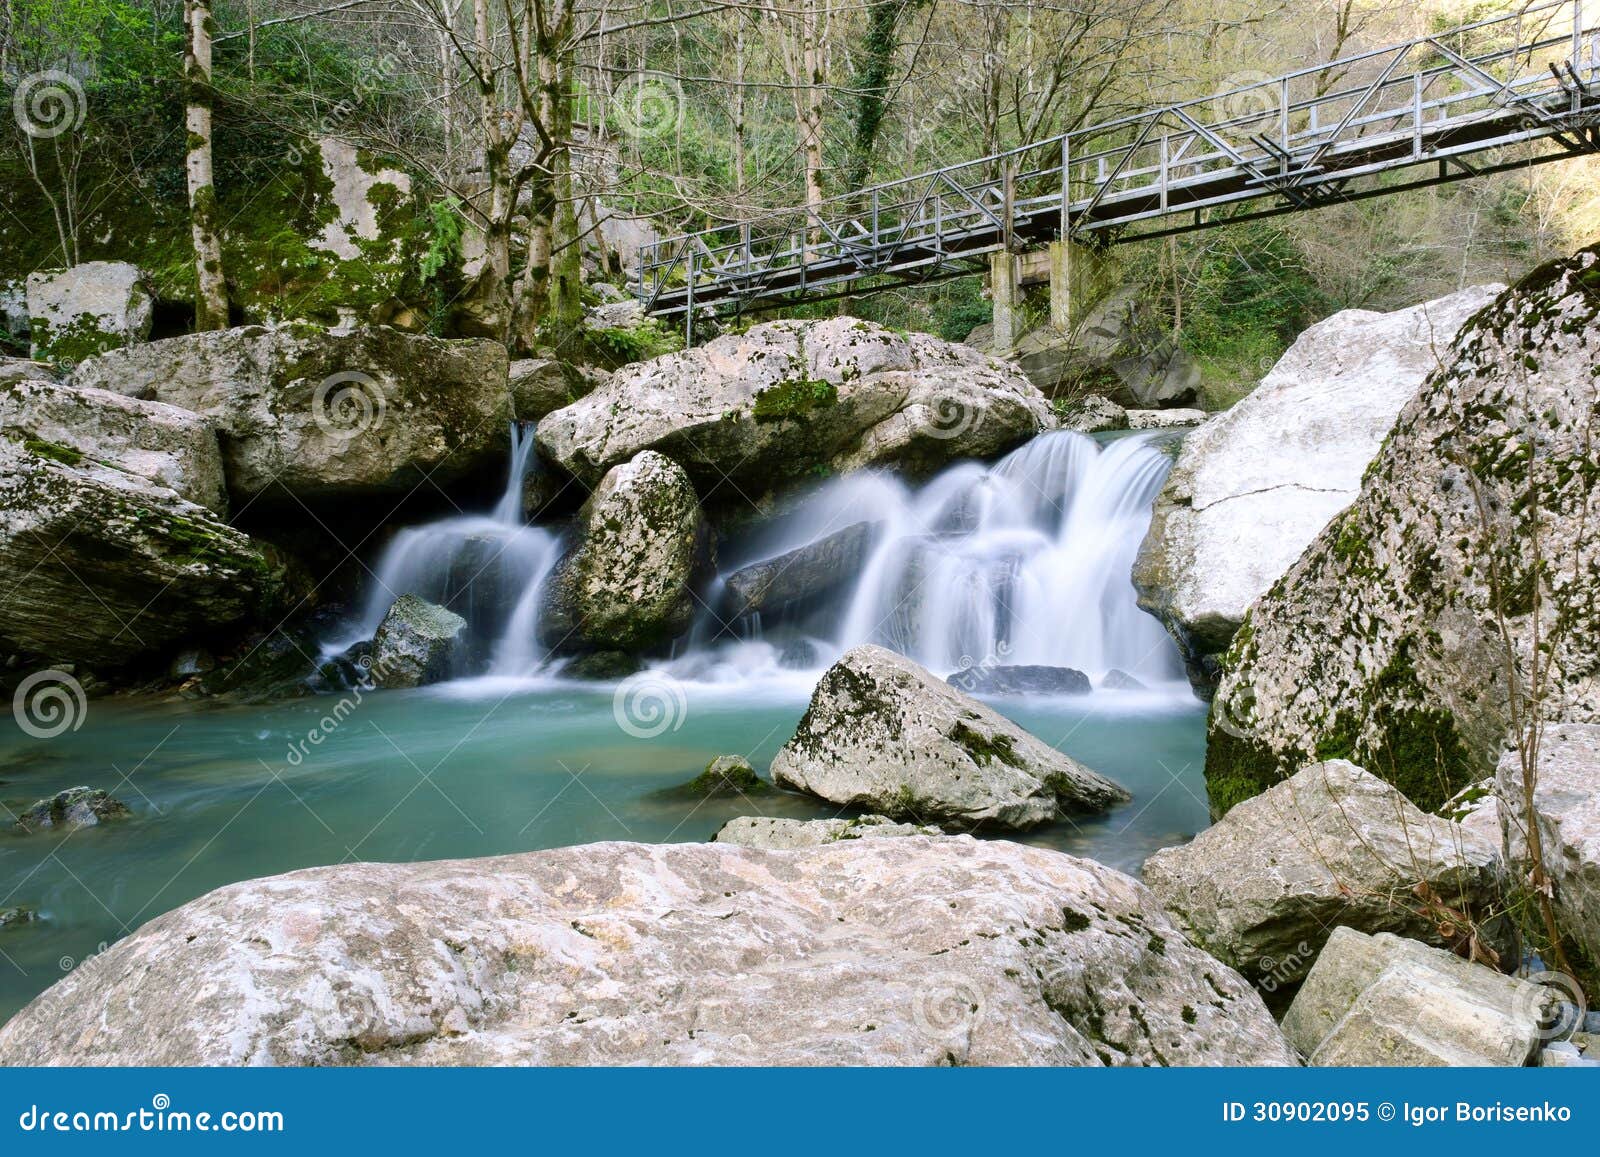 Bridge Over Waterfall Royalty Free Stock Photo Image 30902095